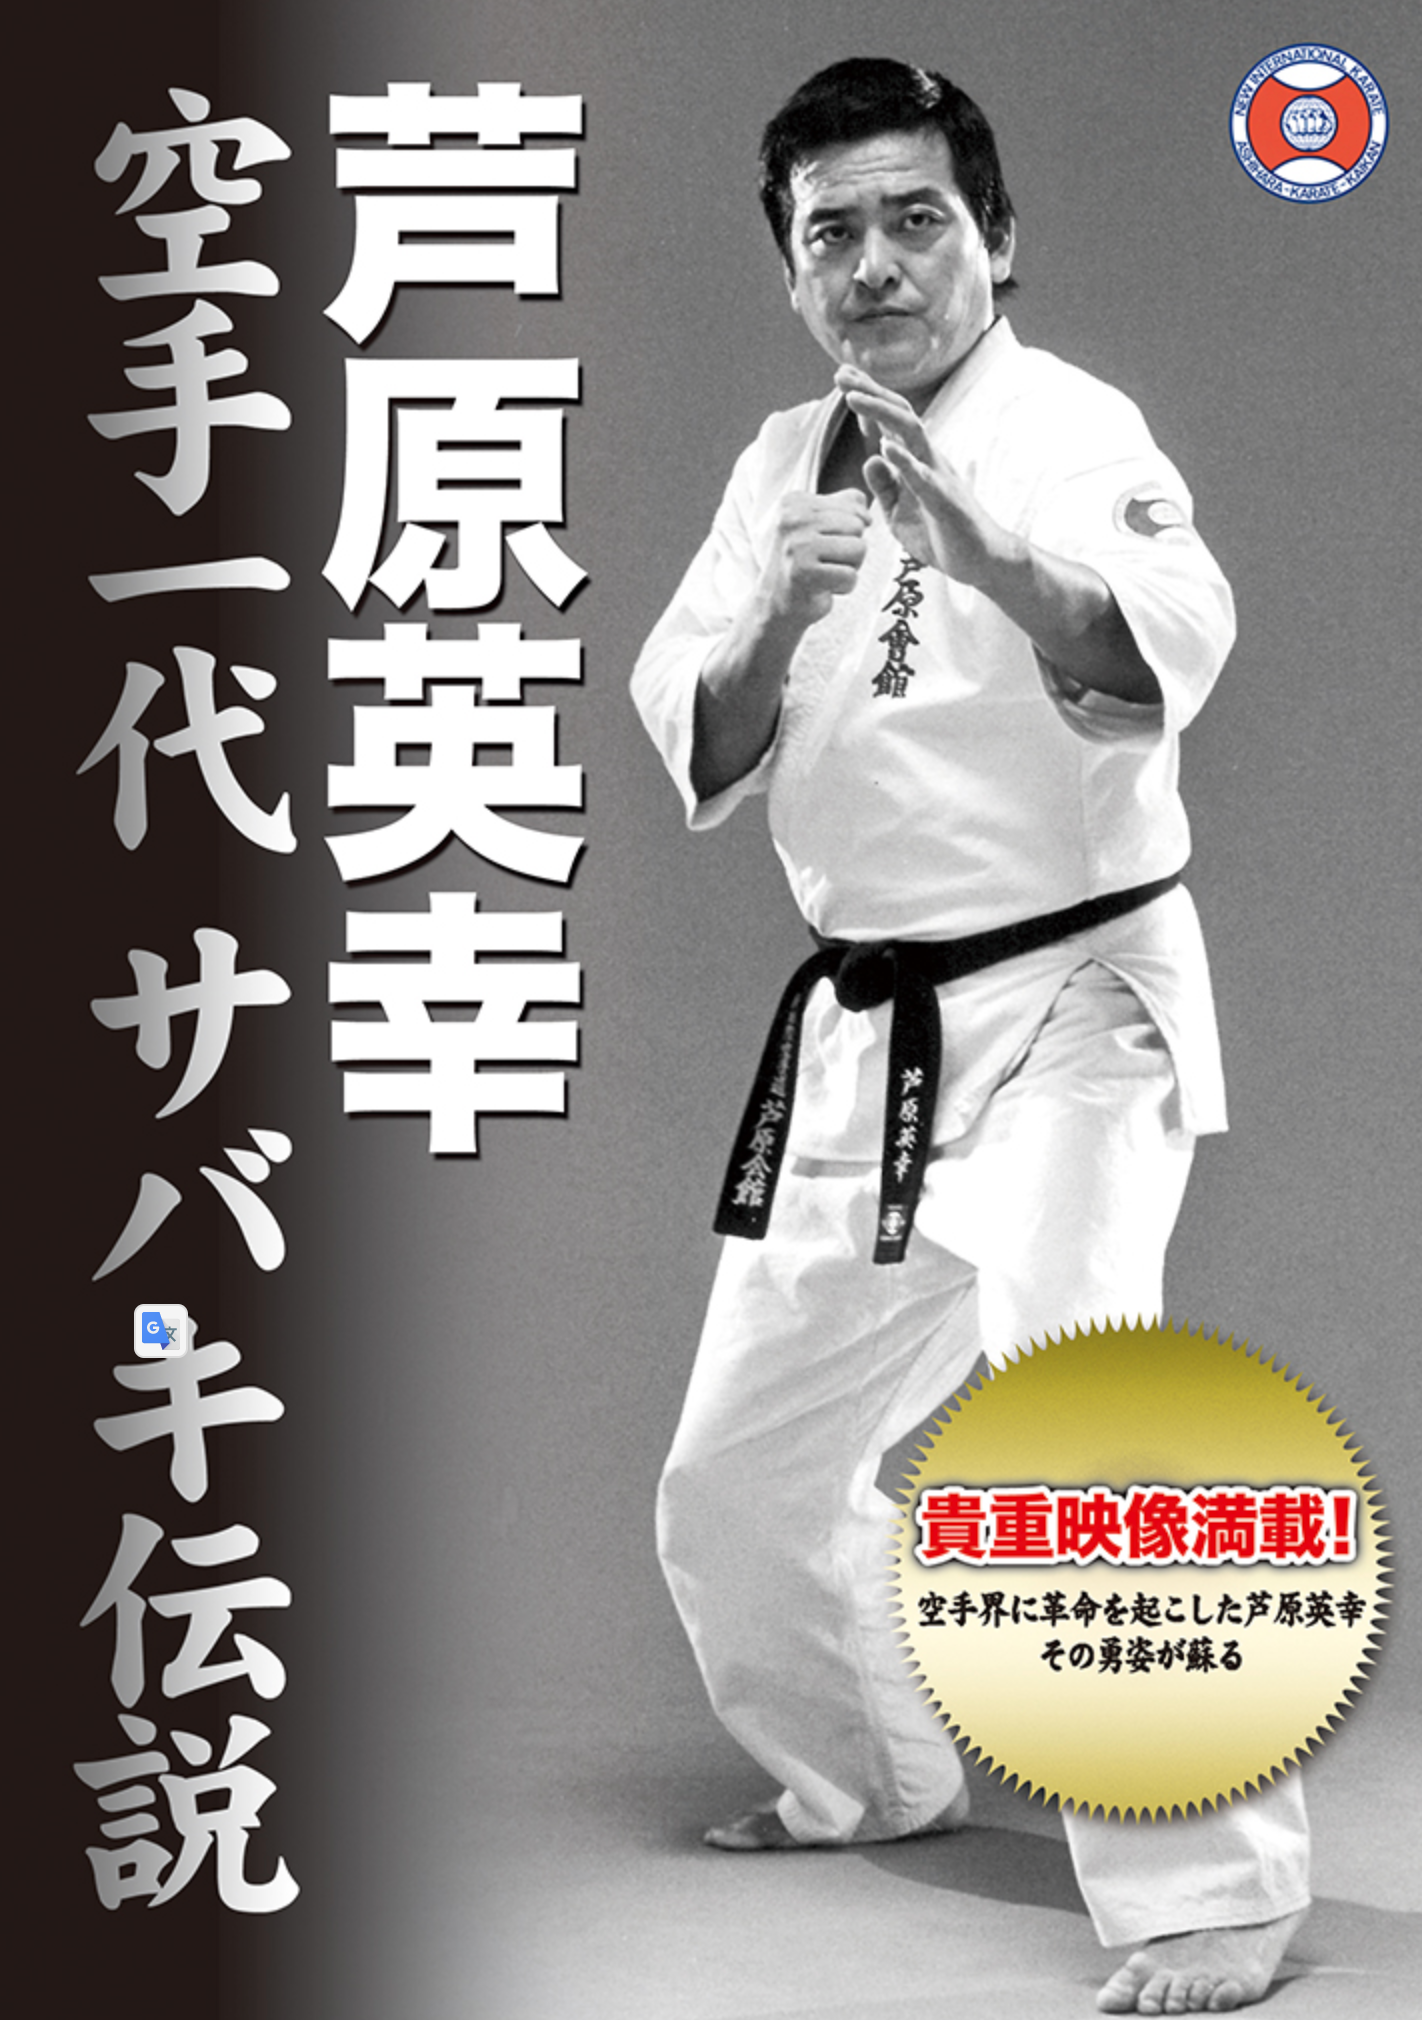 Hideyuki Ashihara Karate Ichidai Sabaki Legend 2 DVD Set - Budovideos